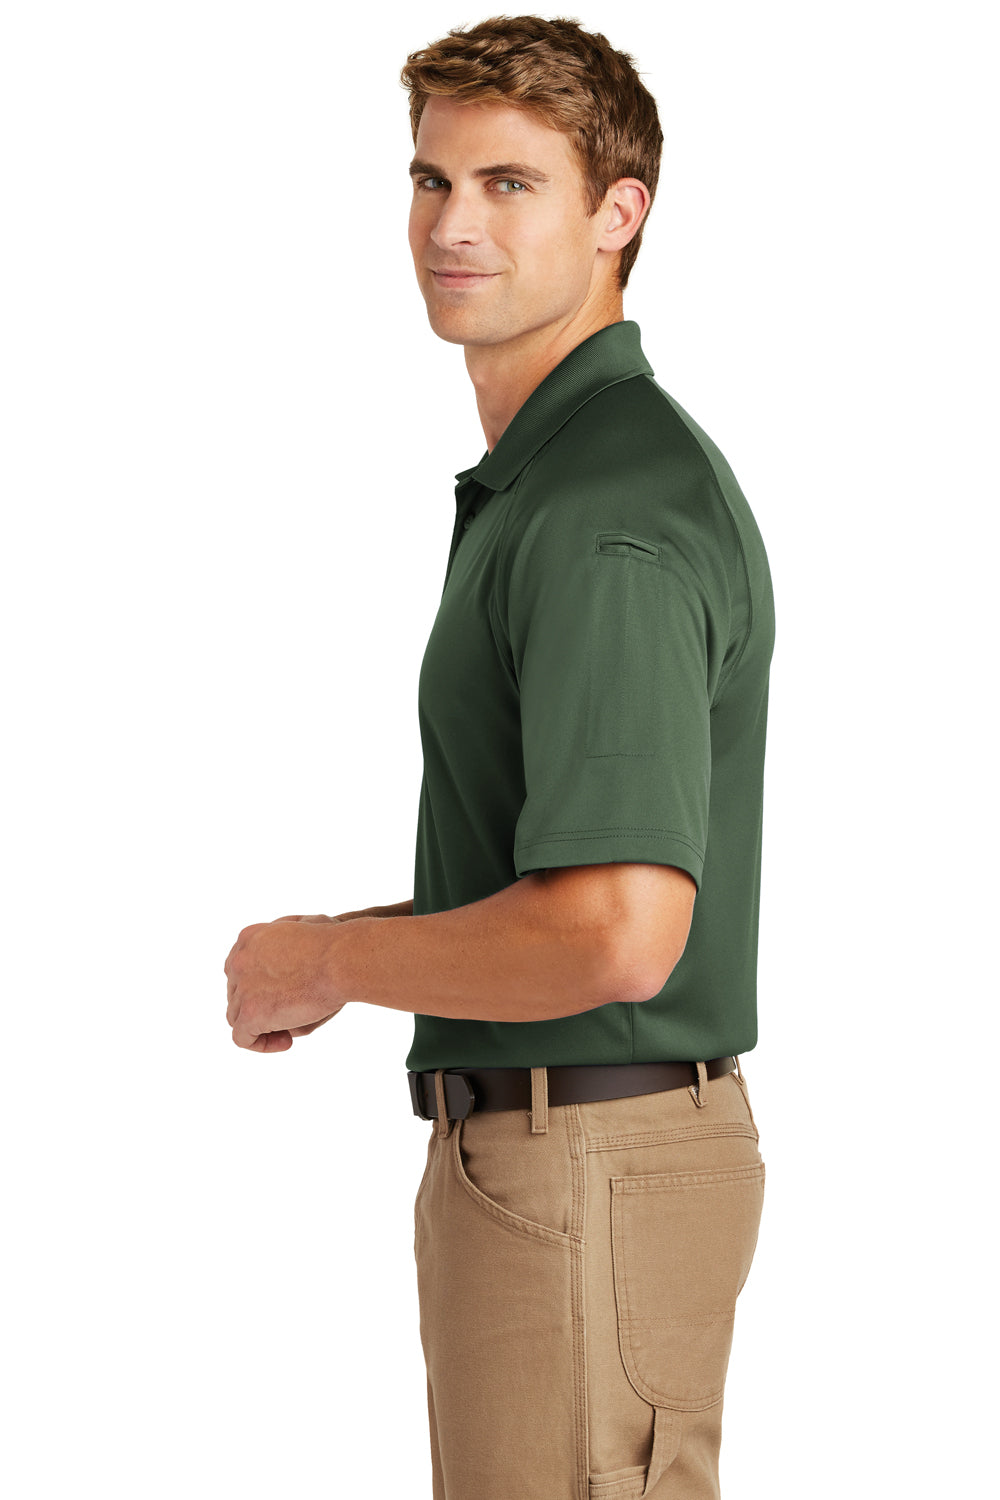 CornerStone CS410 Mens Select Tactical Moisture Wicking Short Sleeve Polo Shirt Dark Green Side